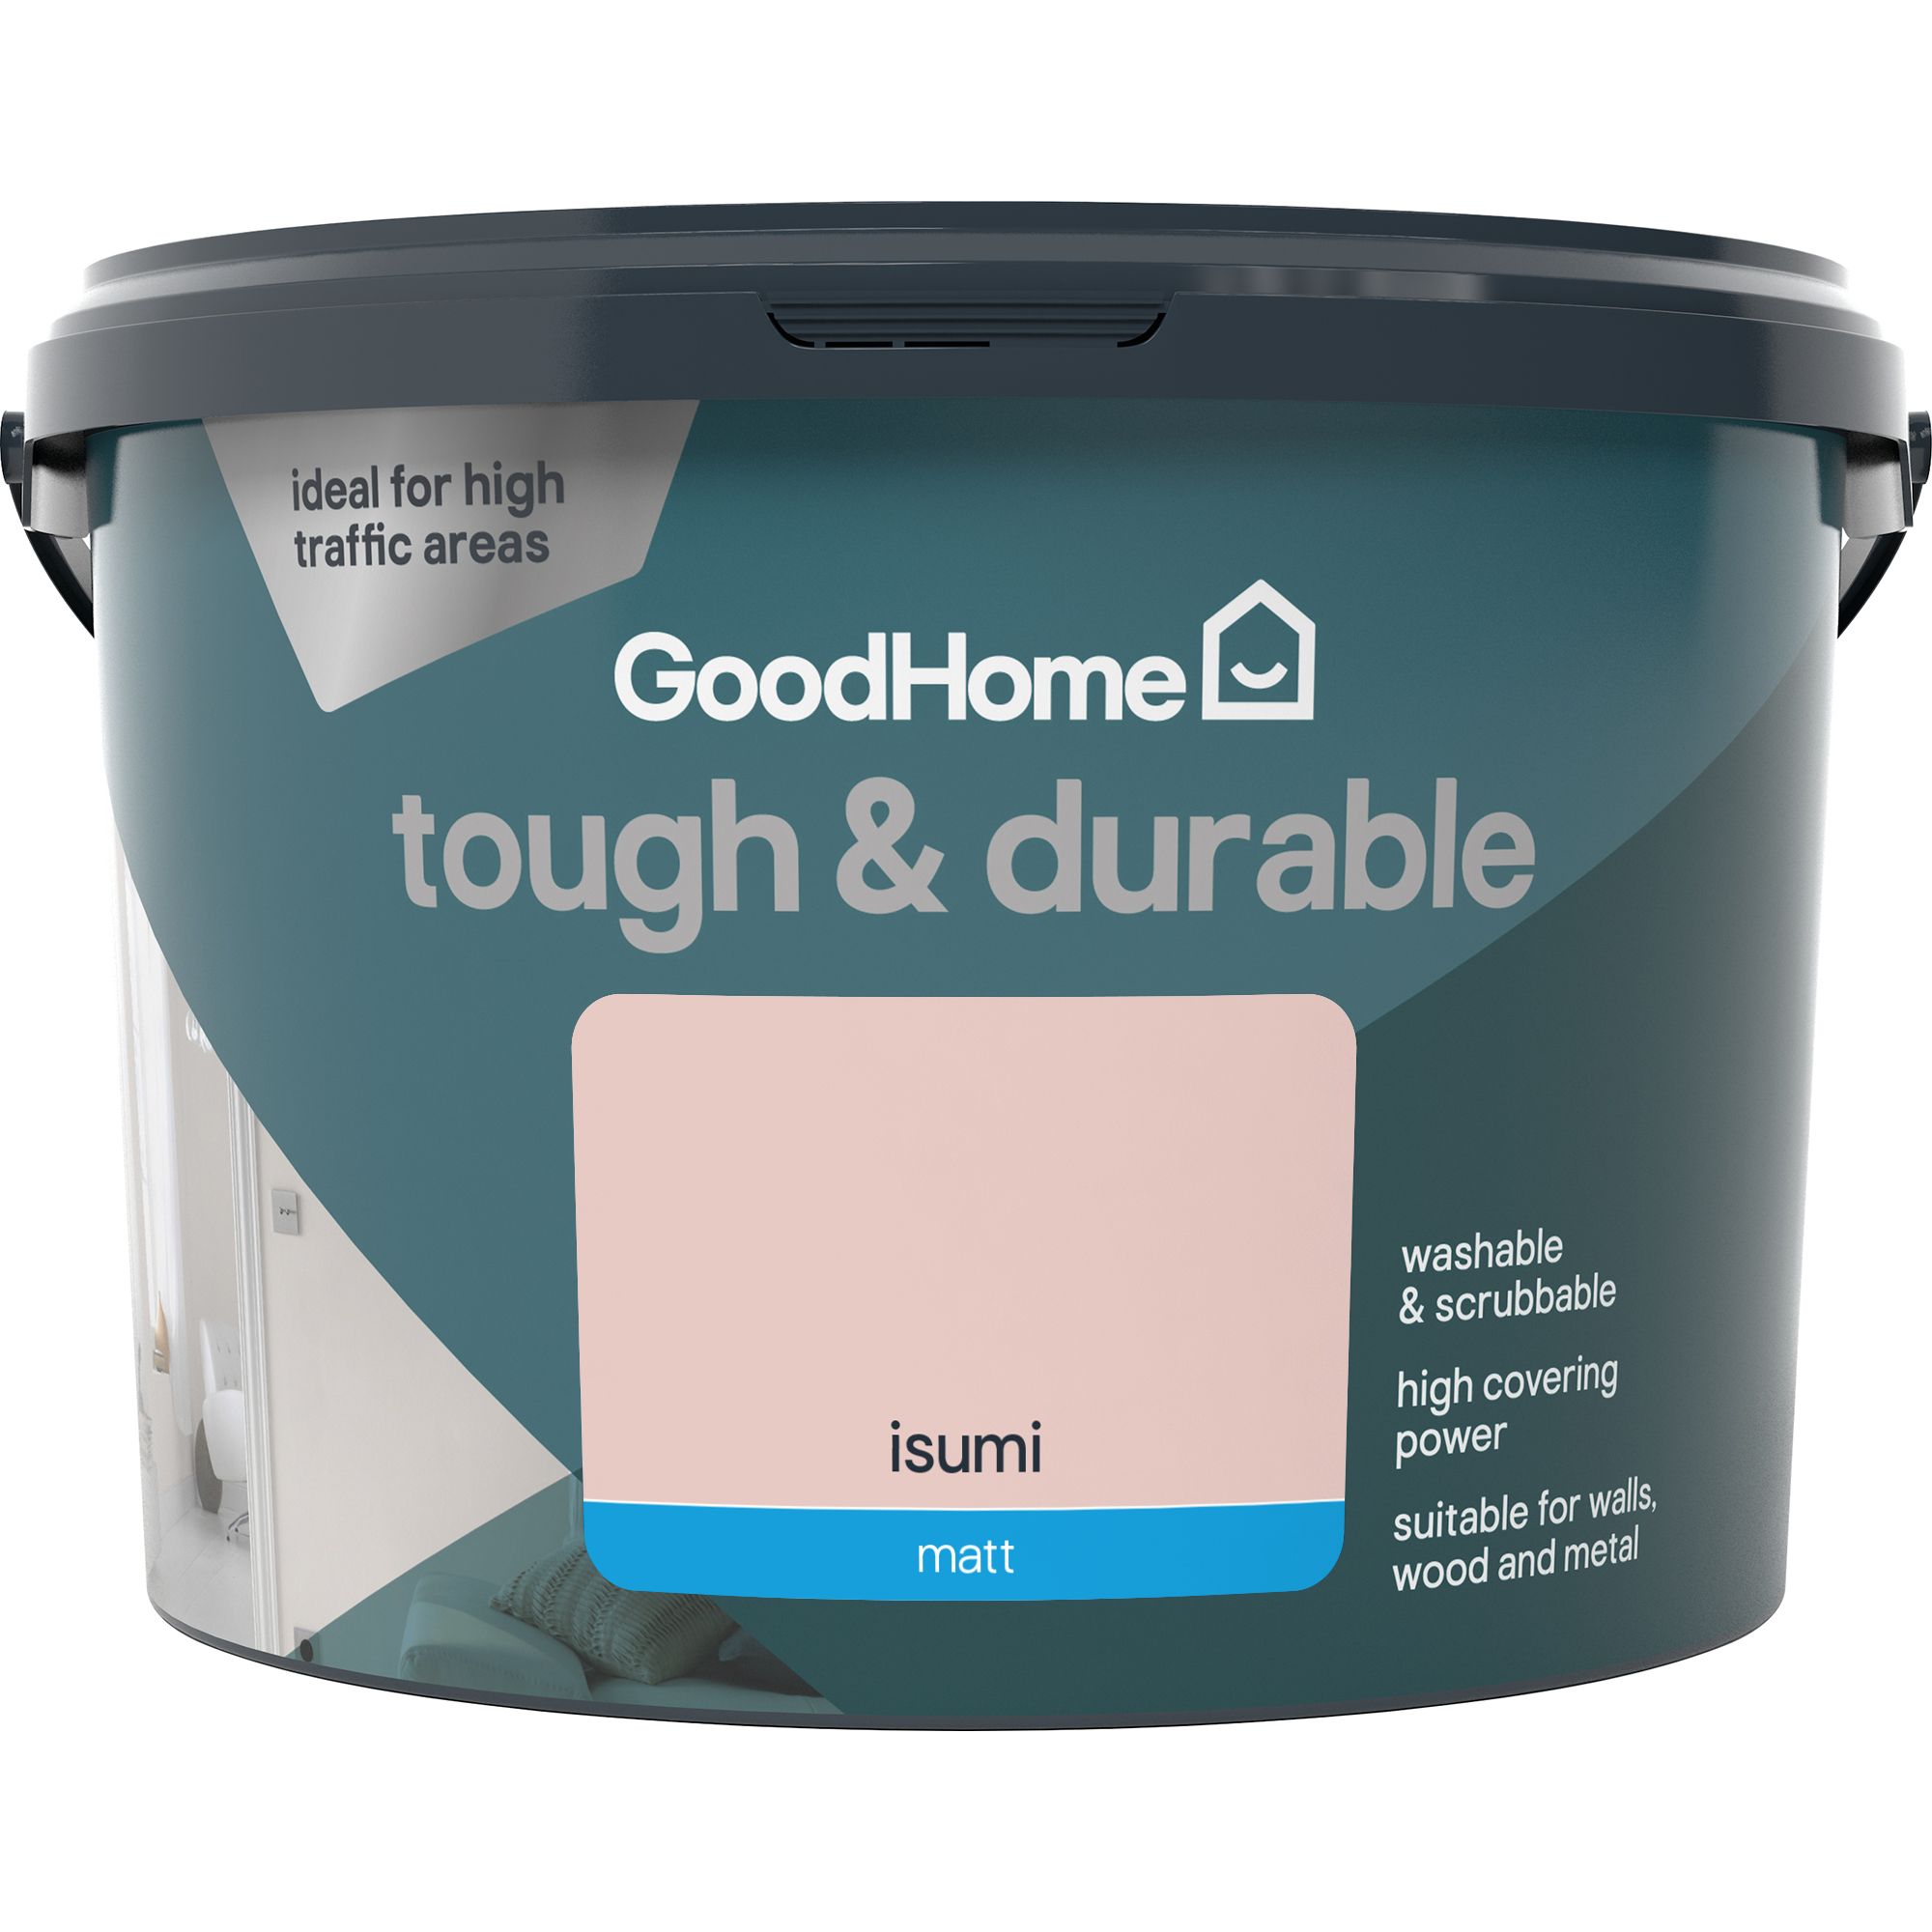 GoodHome Tough & Durable Isumi Matt Emulsion paint, 2.5L